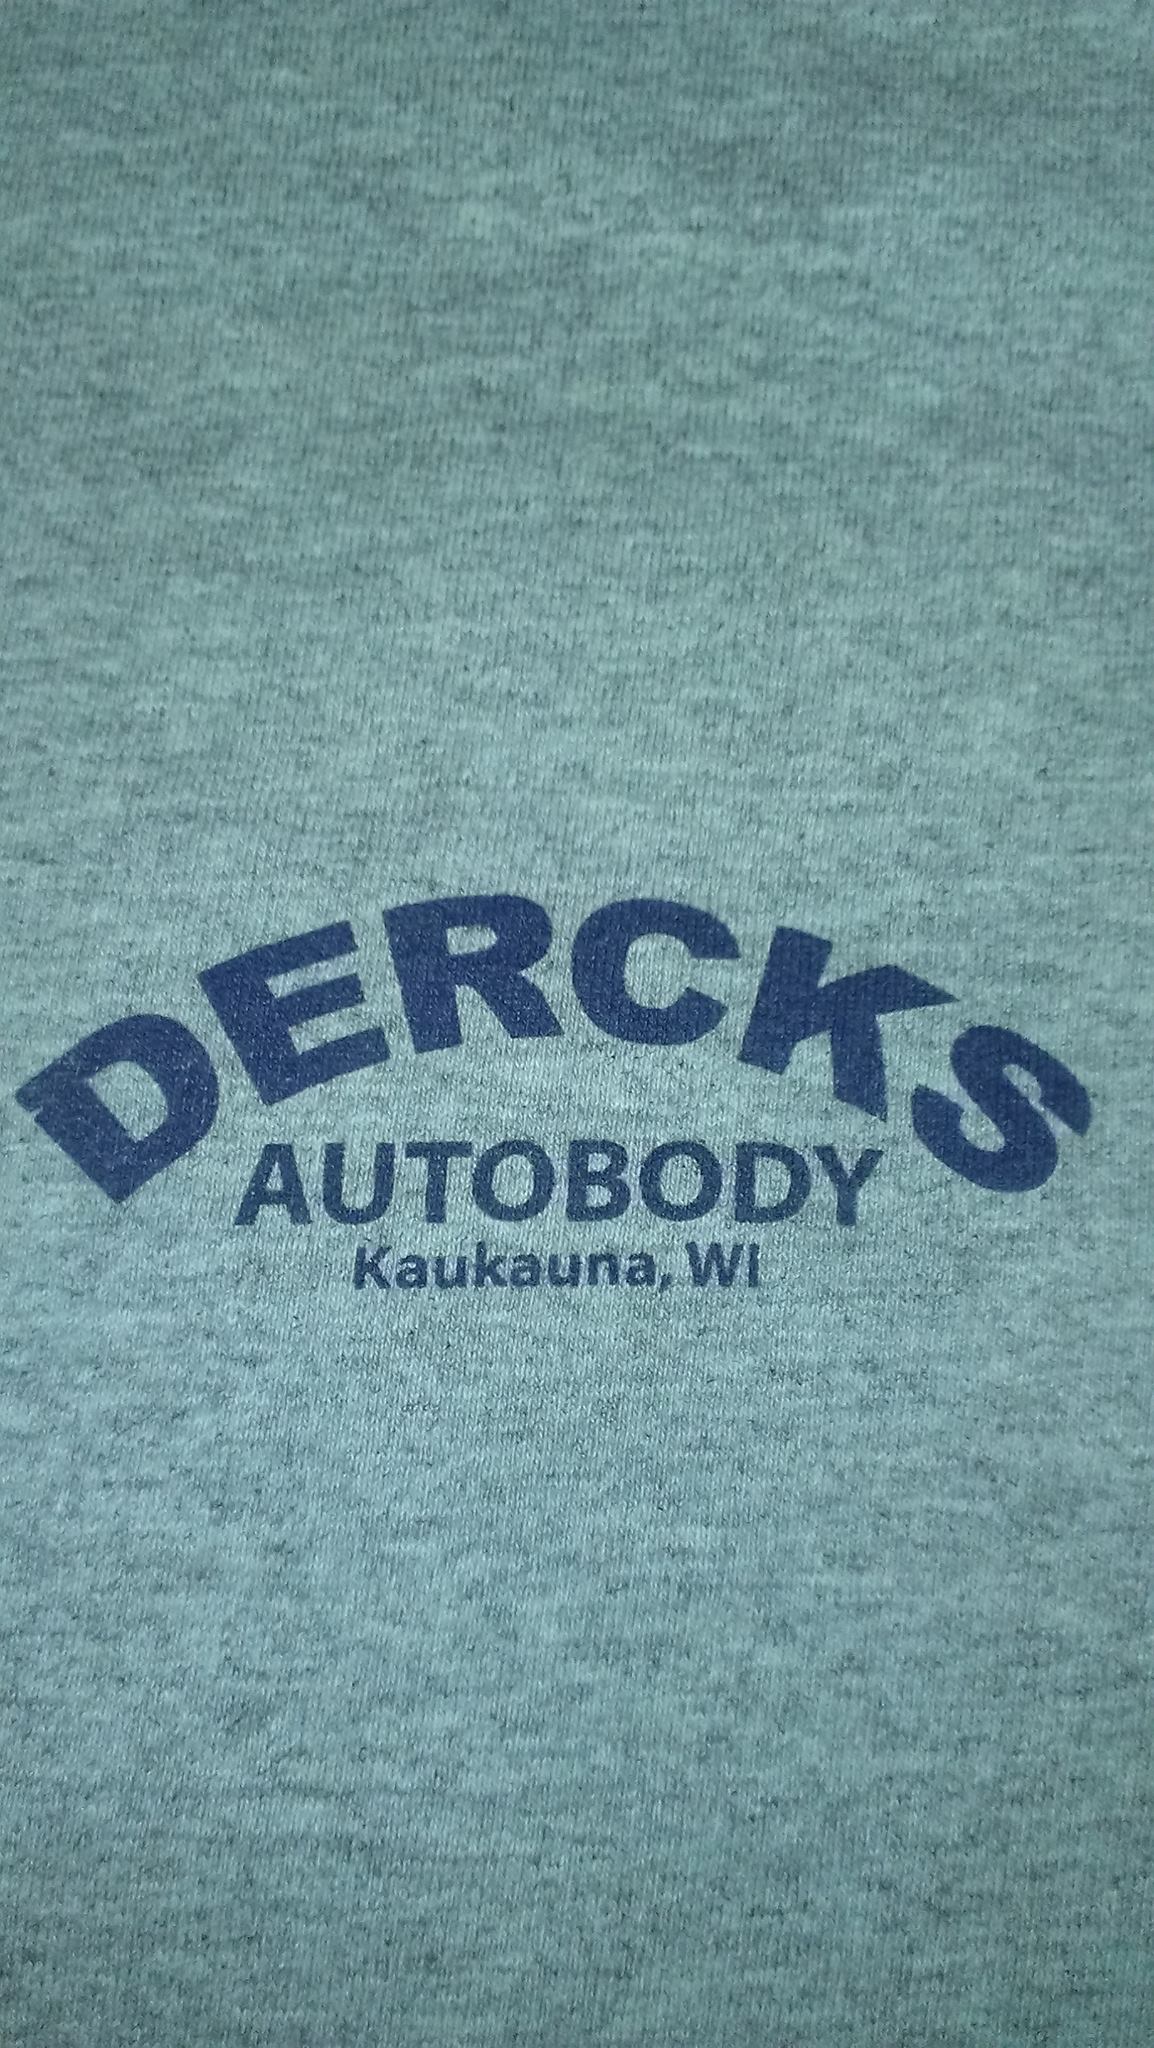 Dercks Auto Body